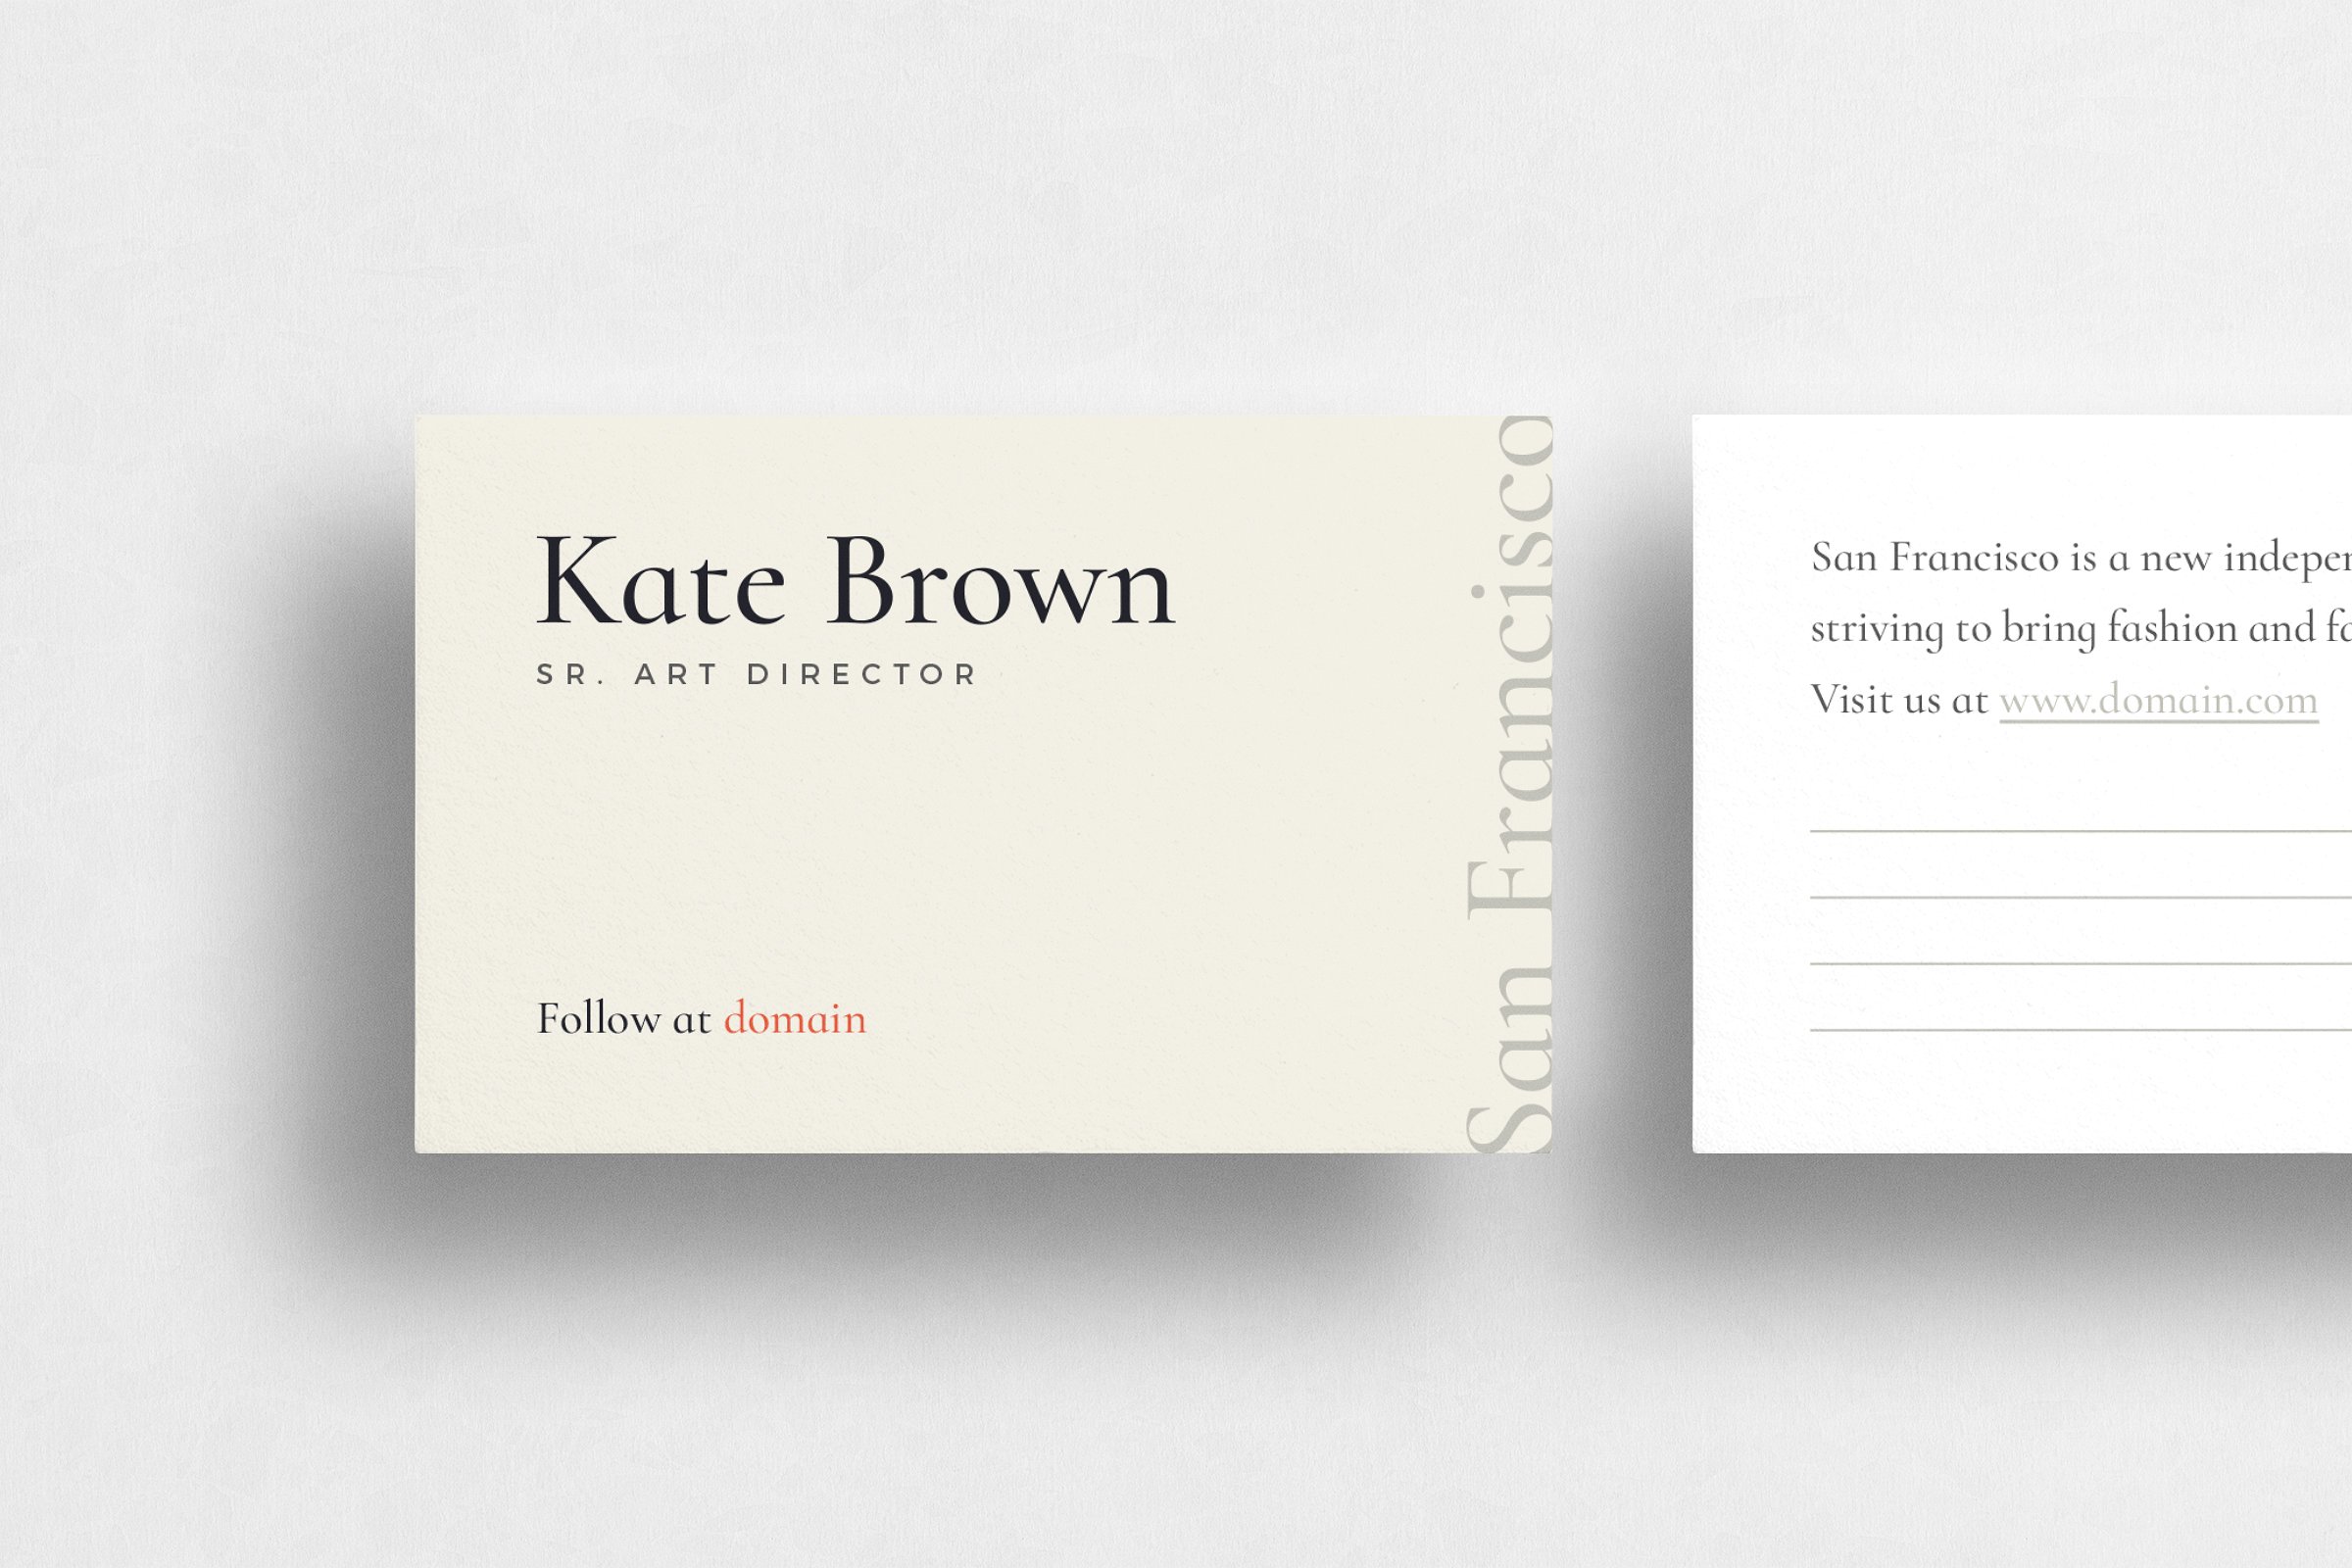 极简主义企业名片设计模板1 San Francisco Business Cards插图(1)